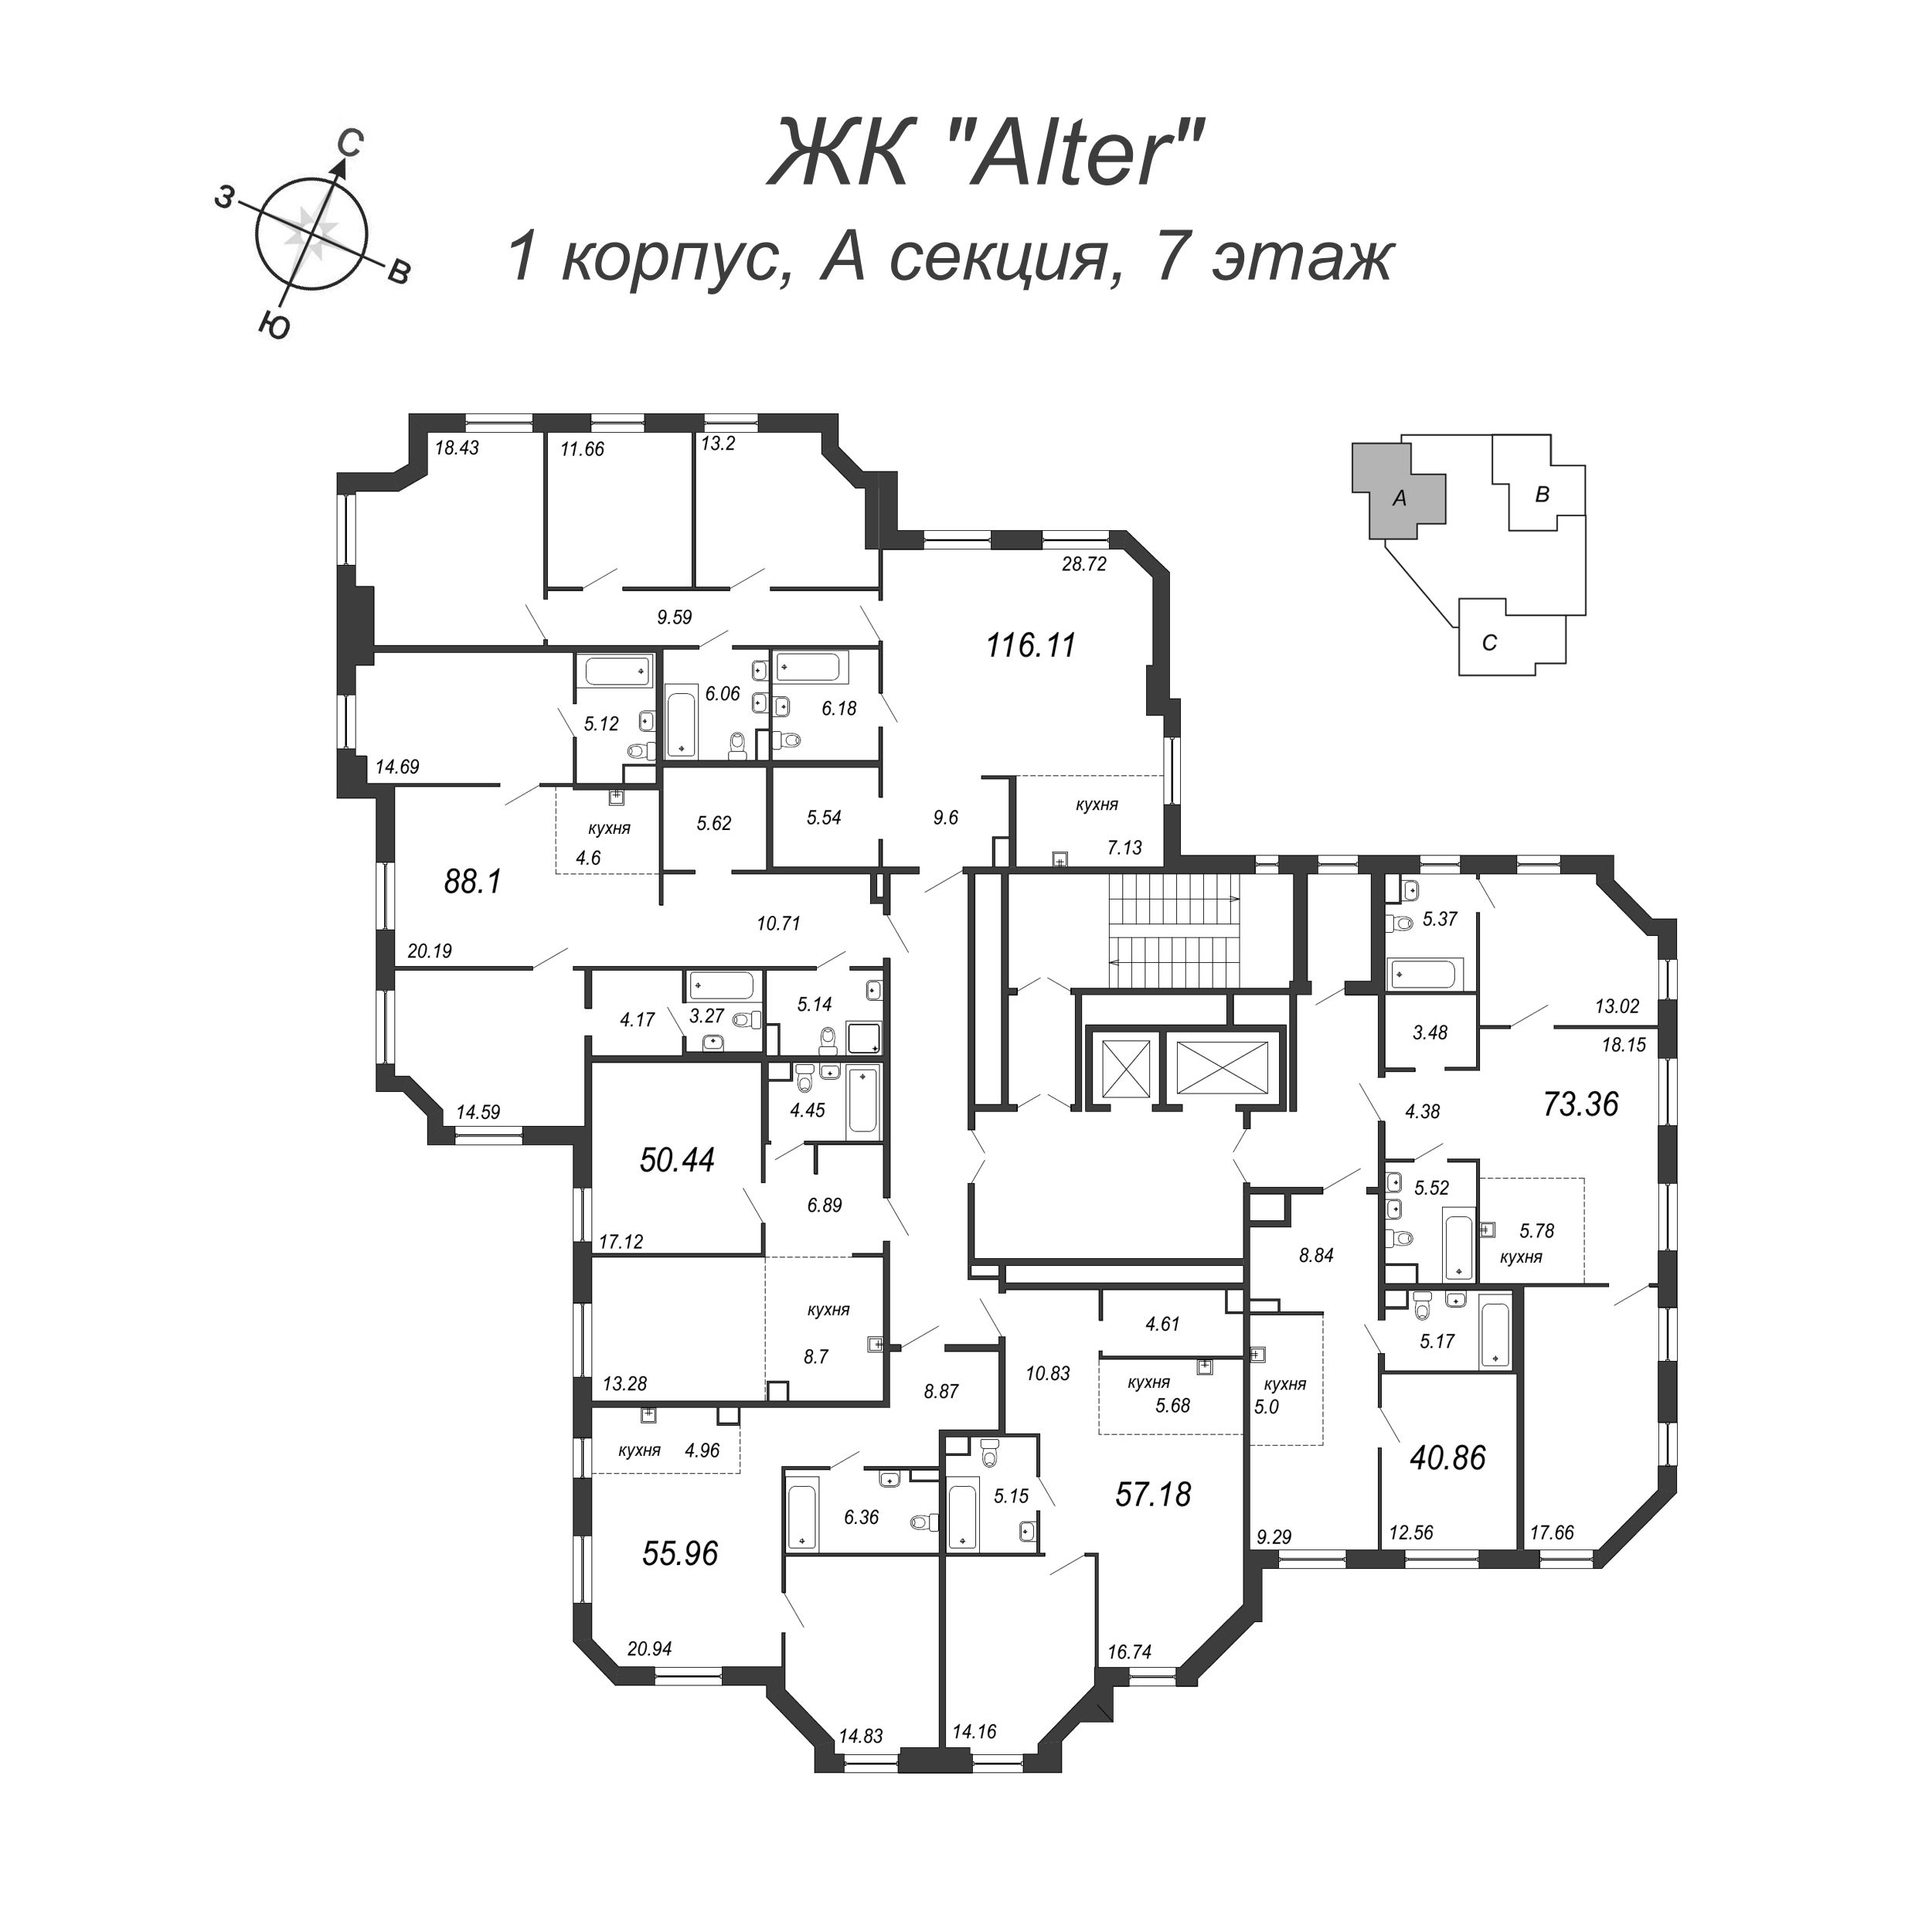 4-комнатная (Евро) квартира, 116.11 м² - планировка этажа